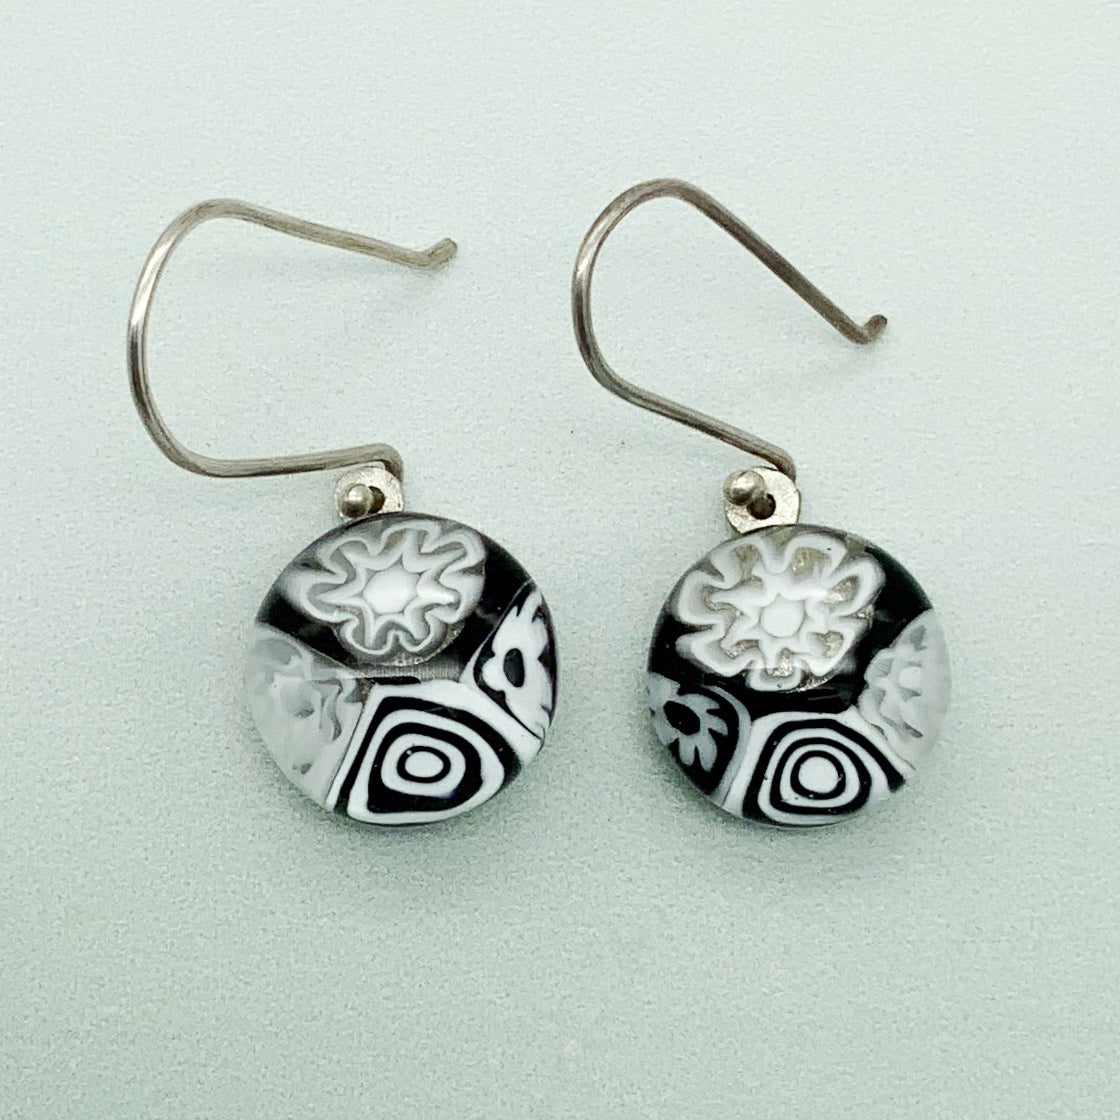 Black and white glass dangle earrings